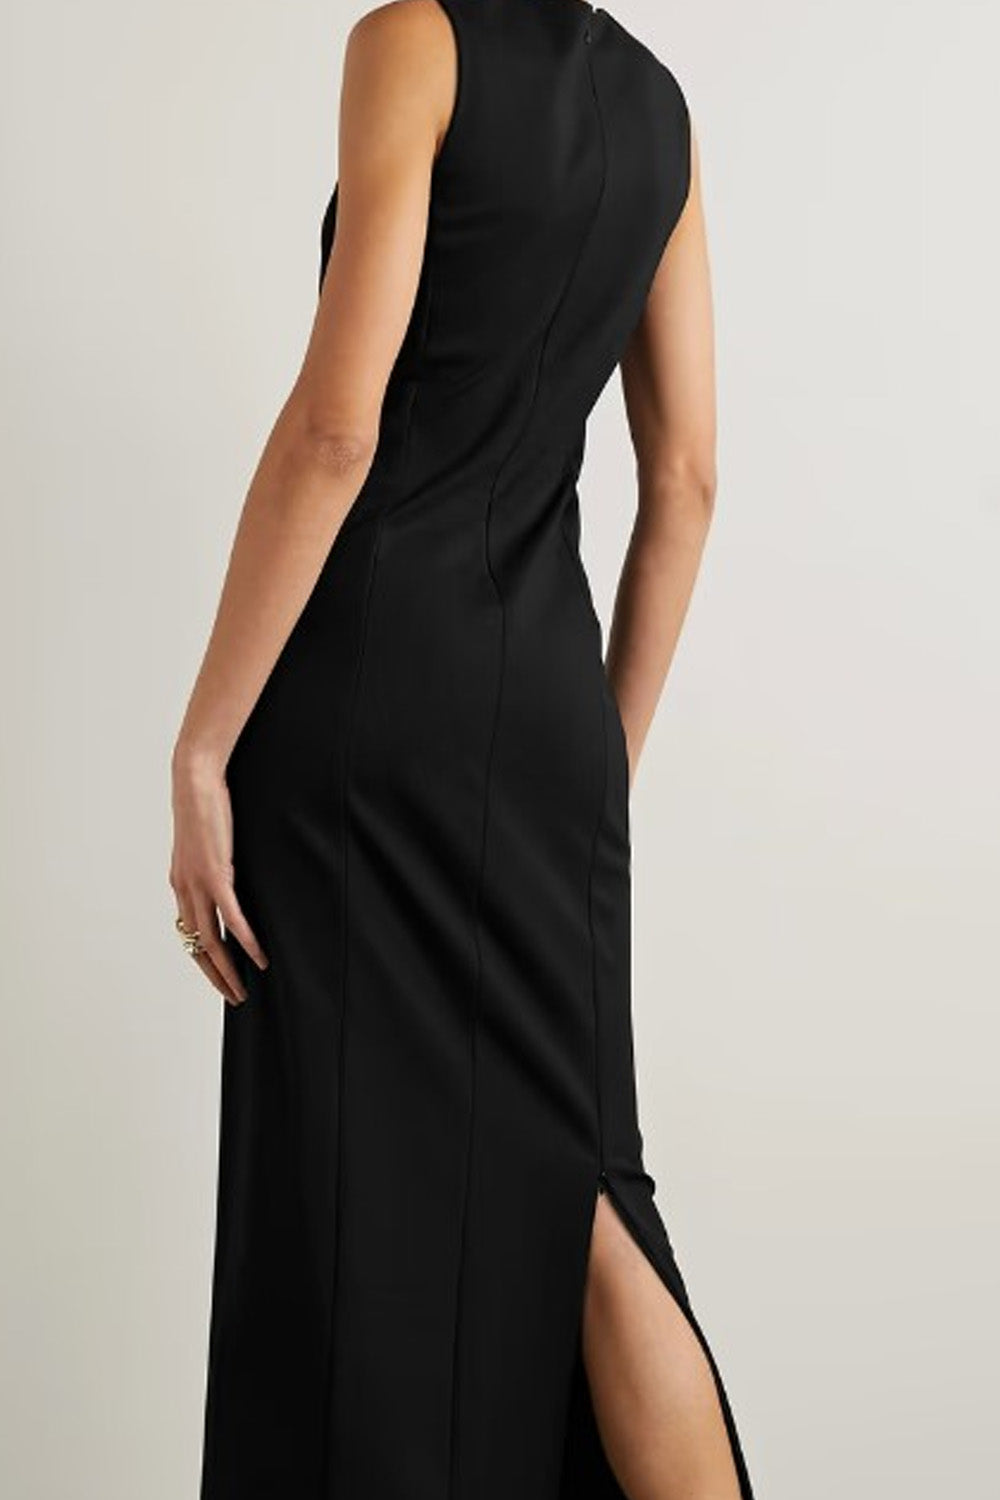 Silhouette Black Dress